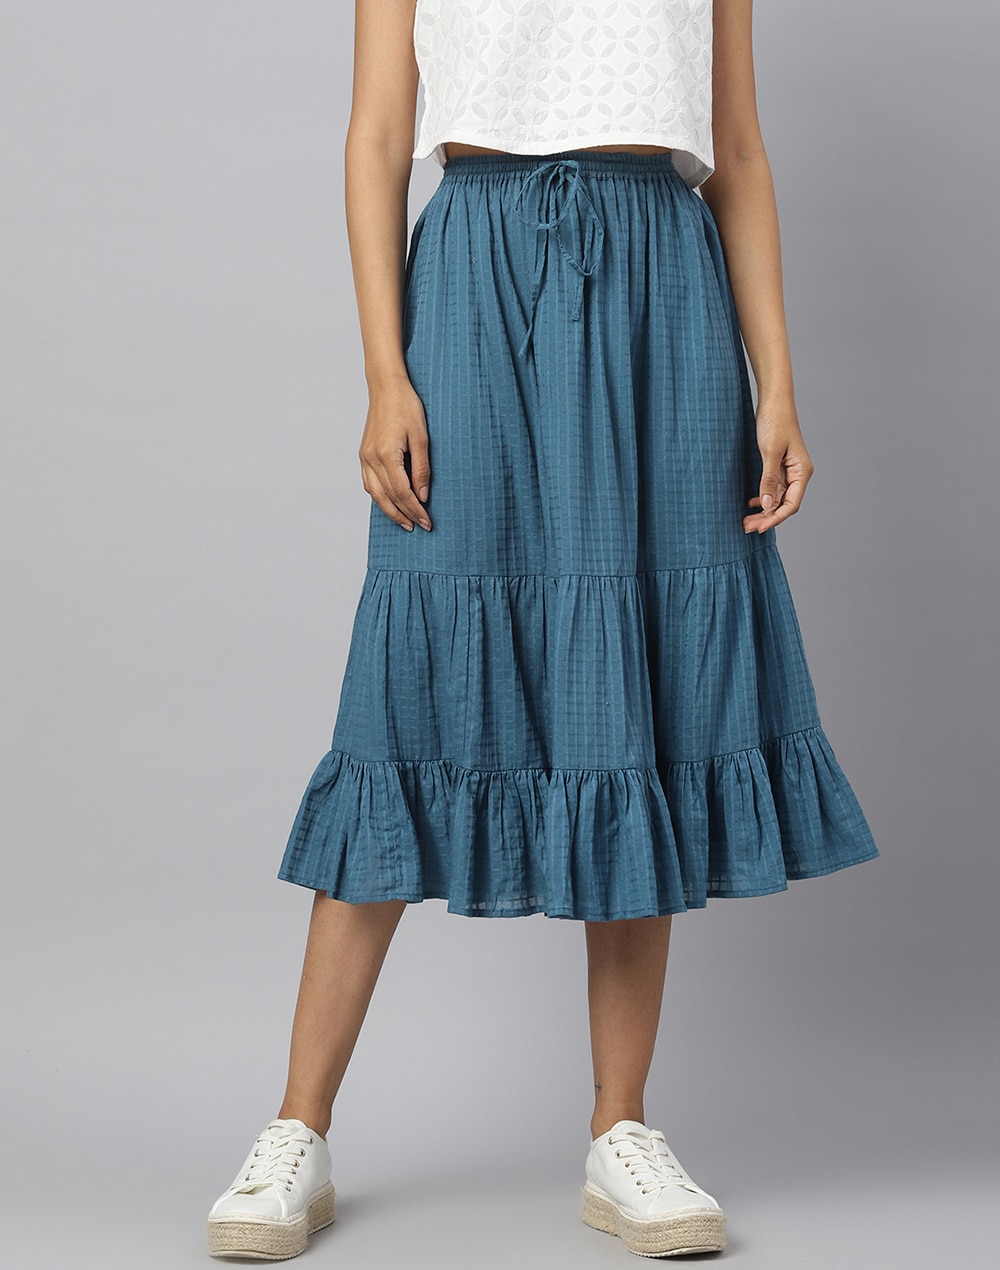 FabNu Cotton Printed Short Skirt